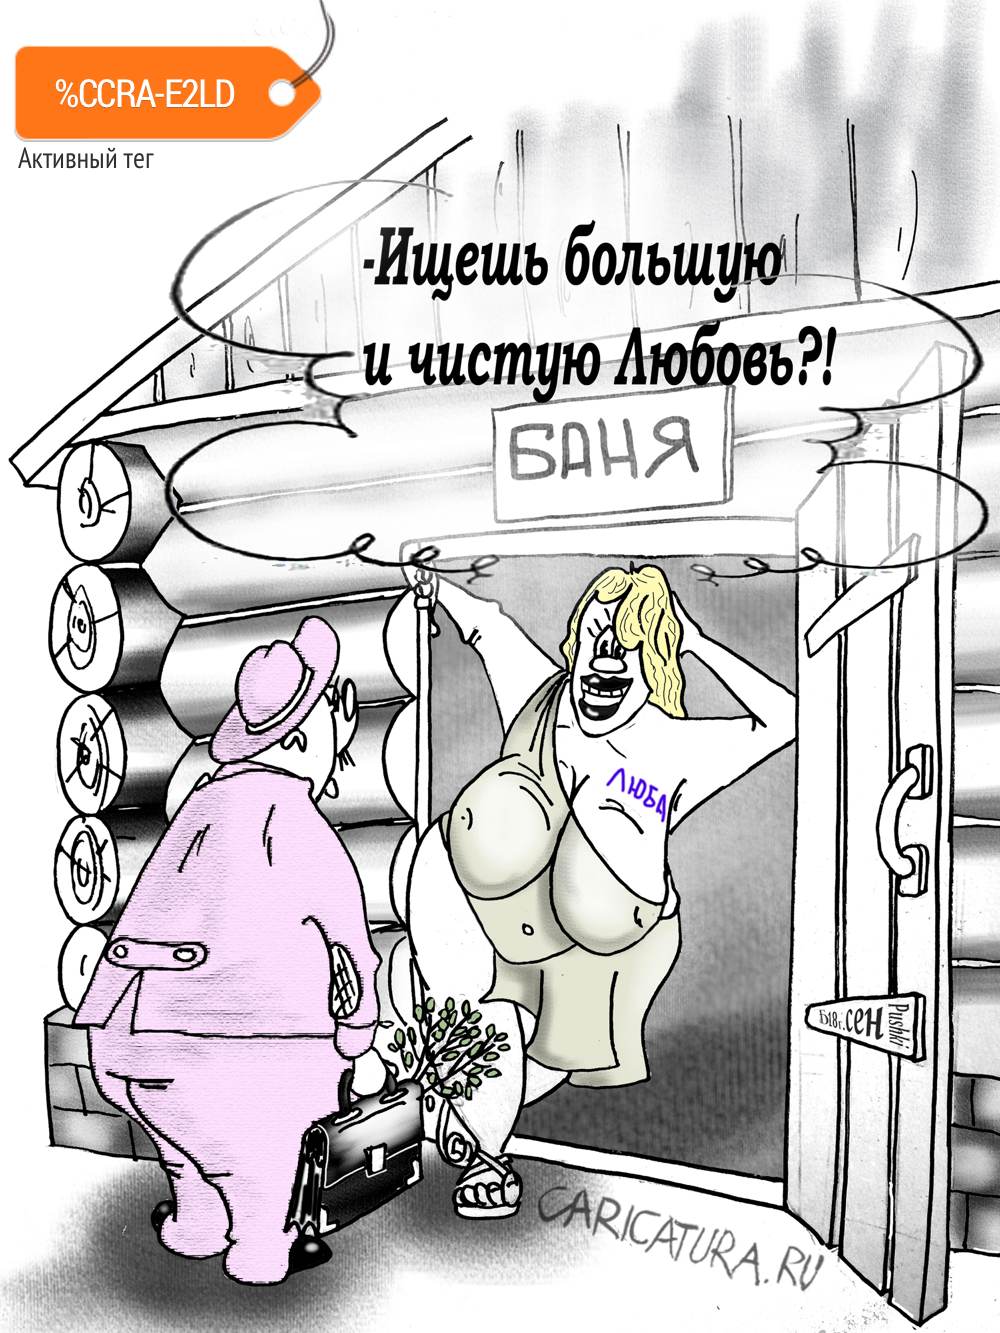 Карикатура "Про большую Любовь", Борис Демин